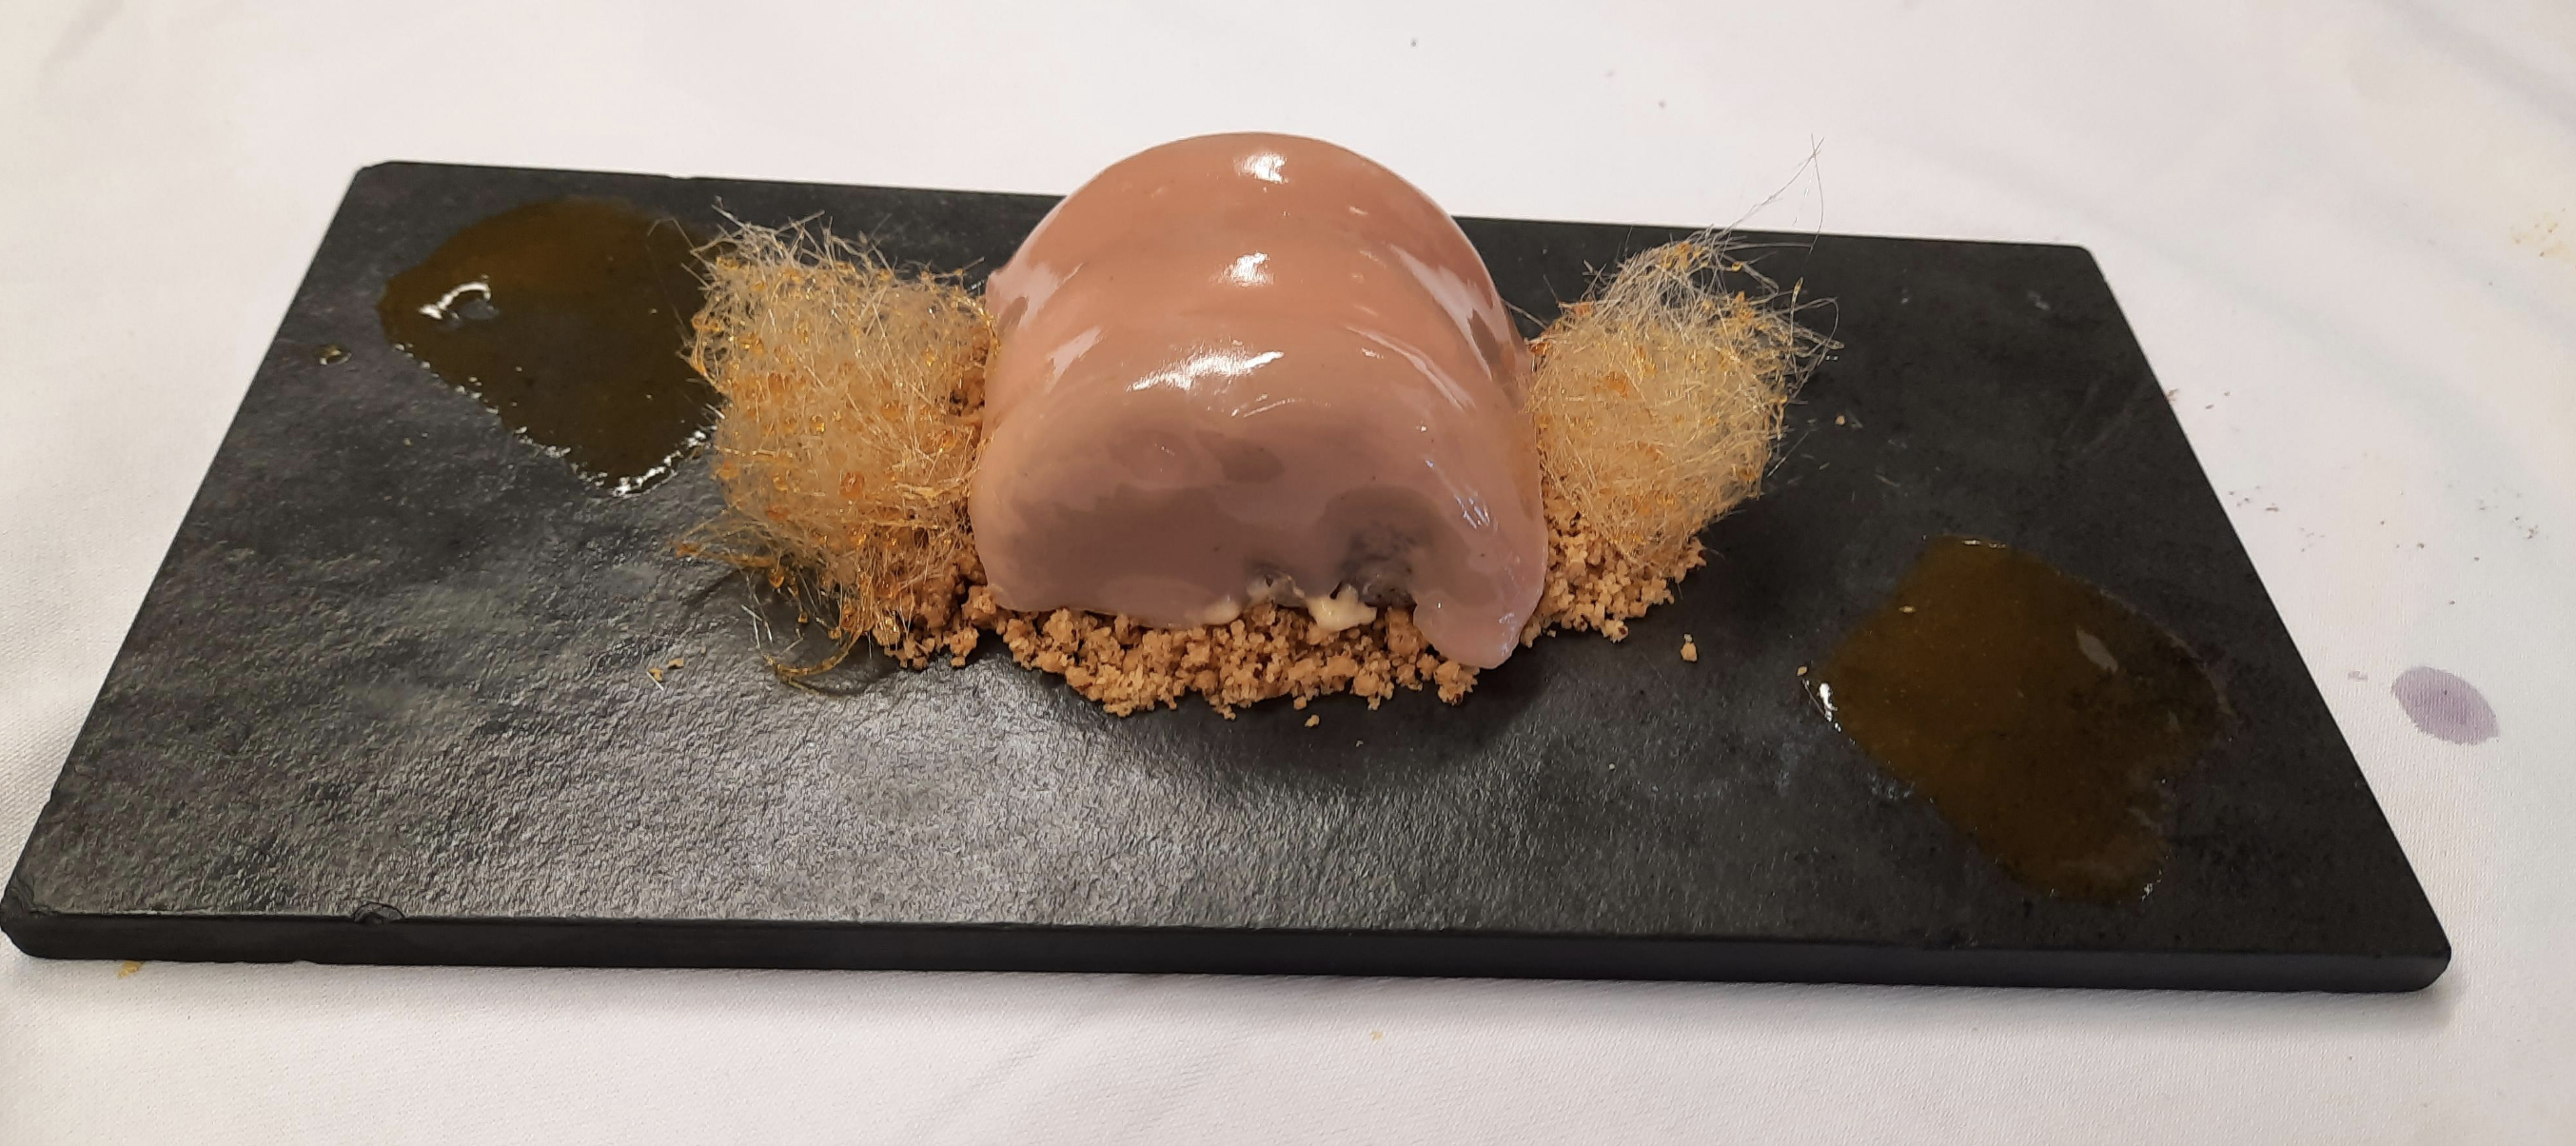 A dessert with a light brown glaze on it